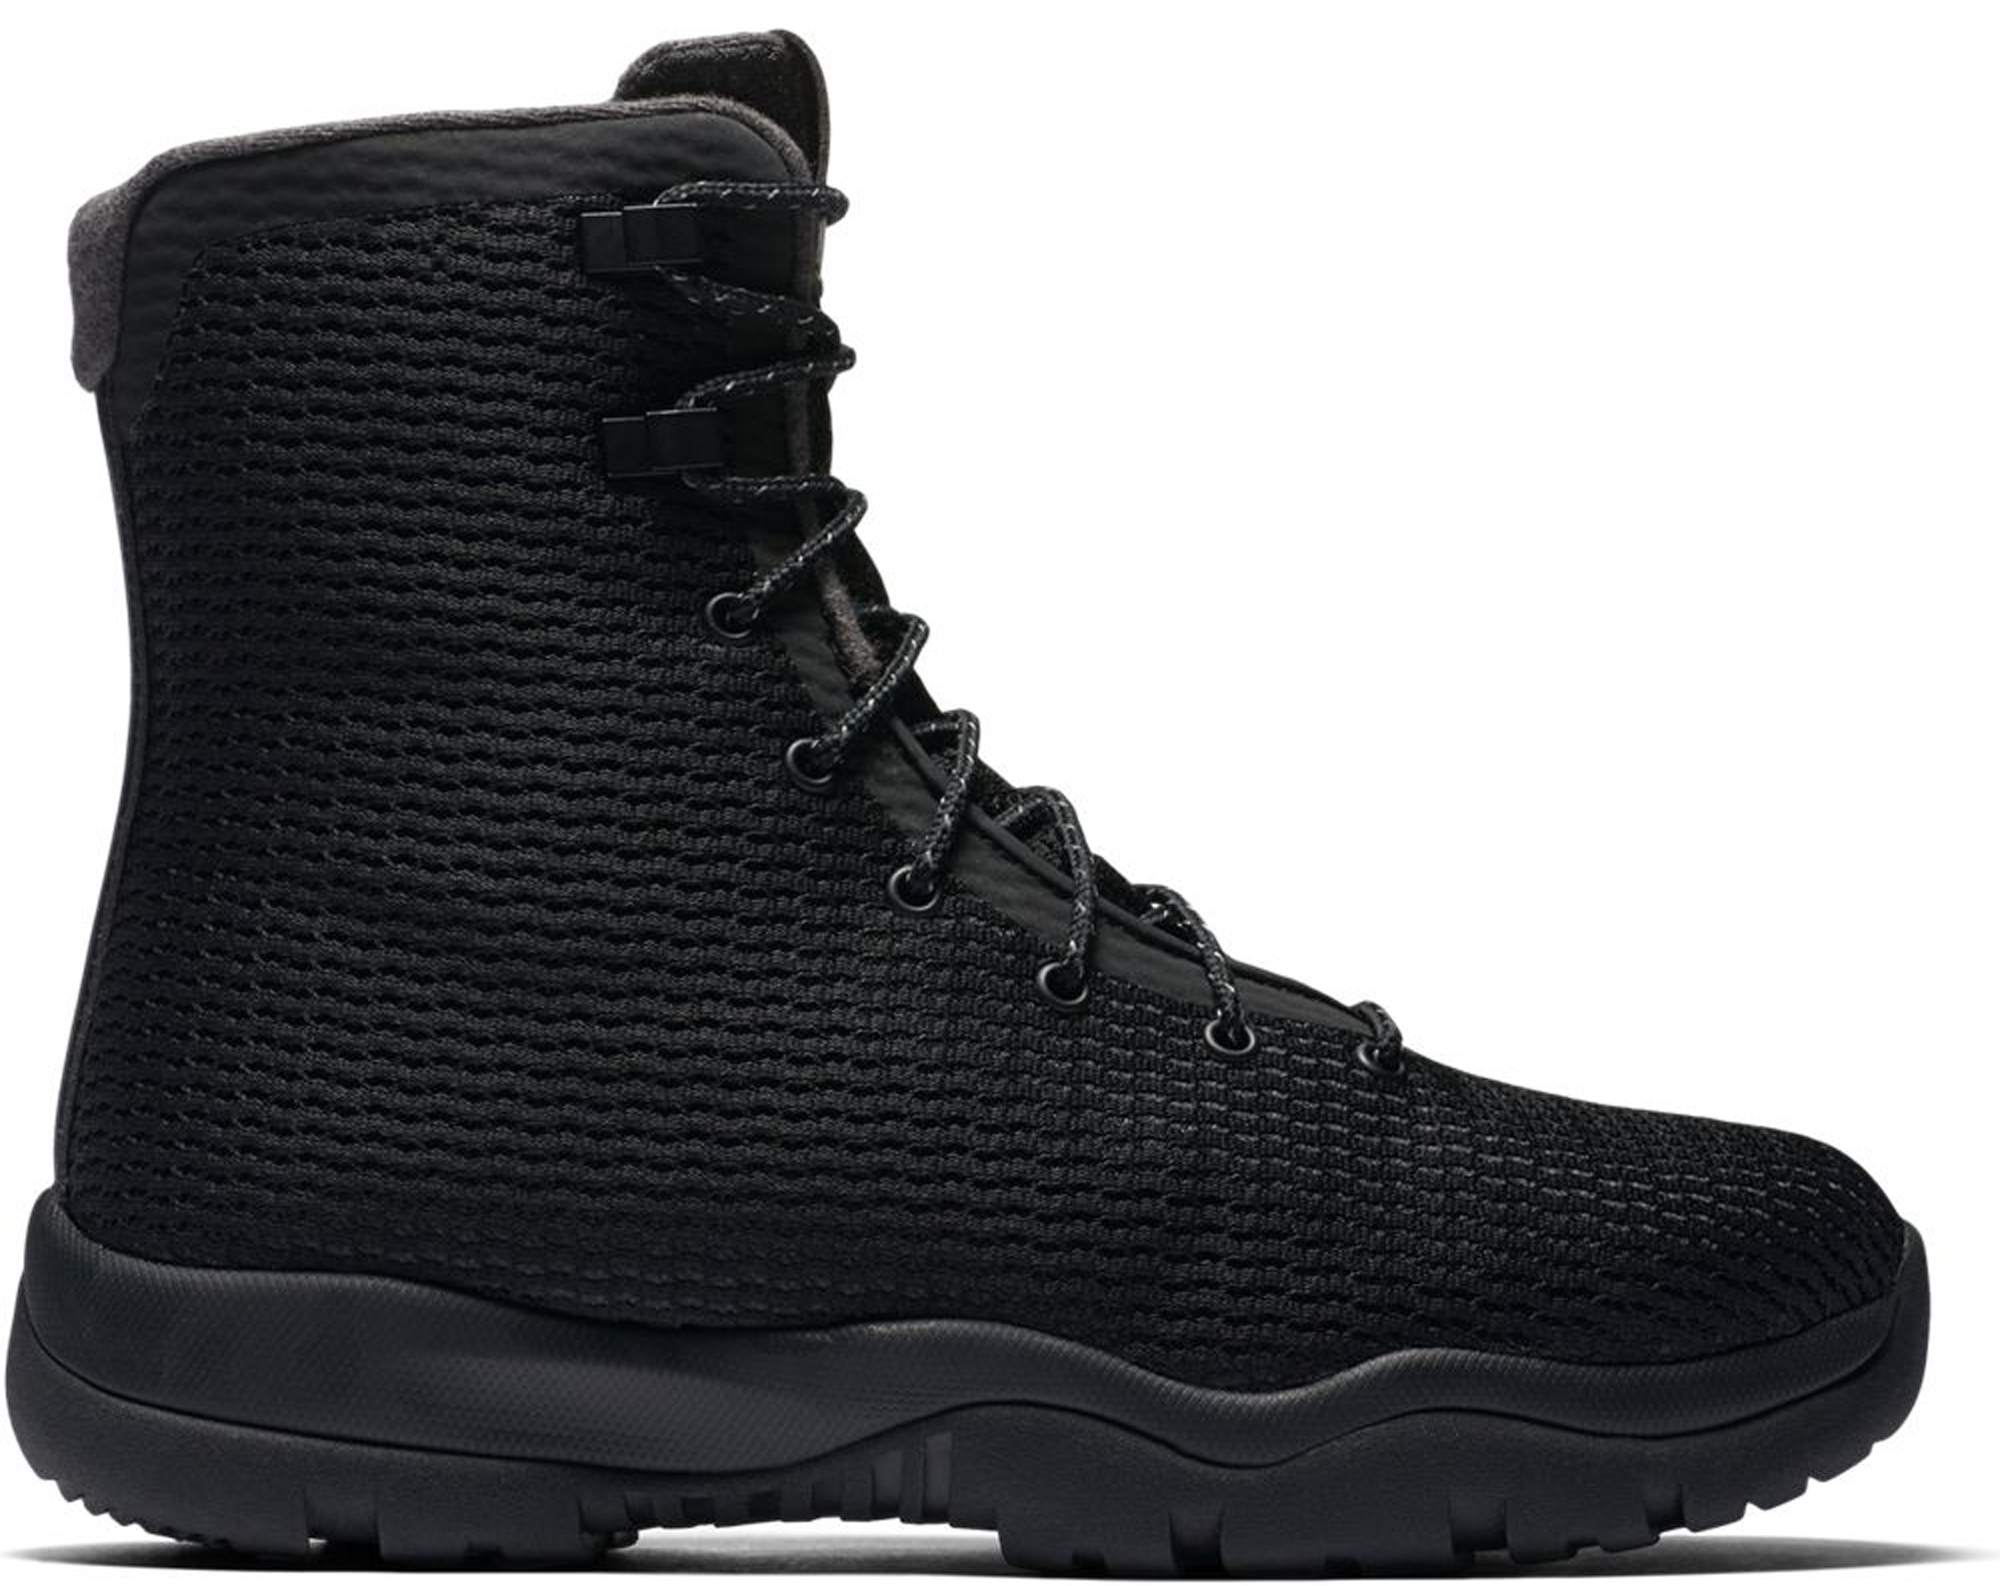 Jordan Future Boot Black - 854554-002